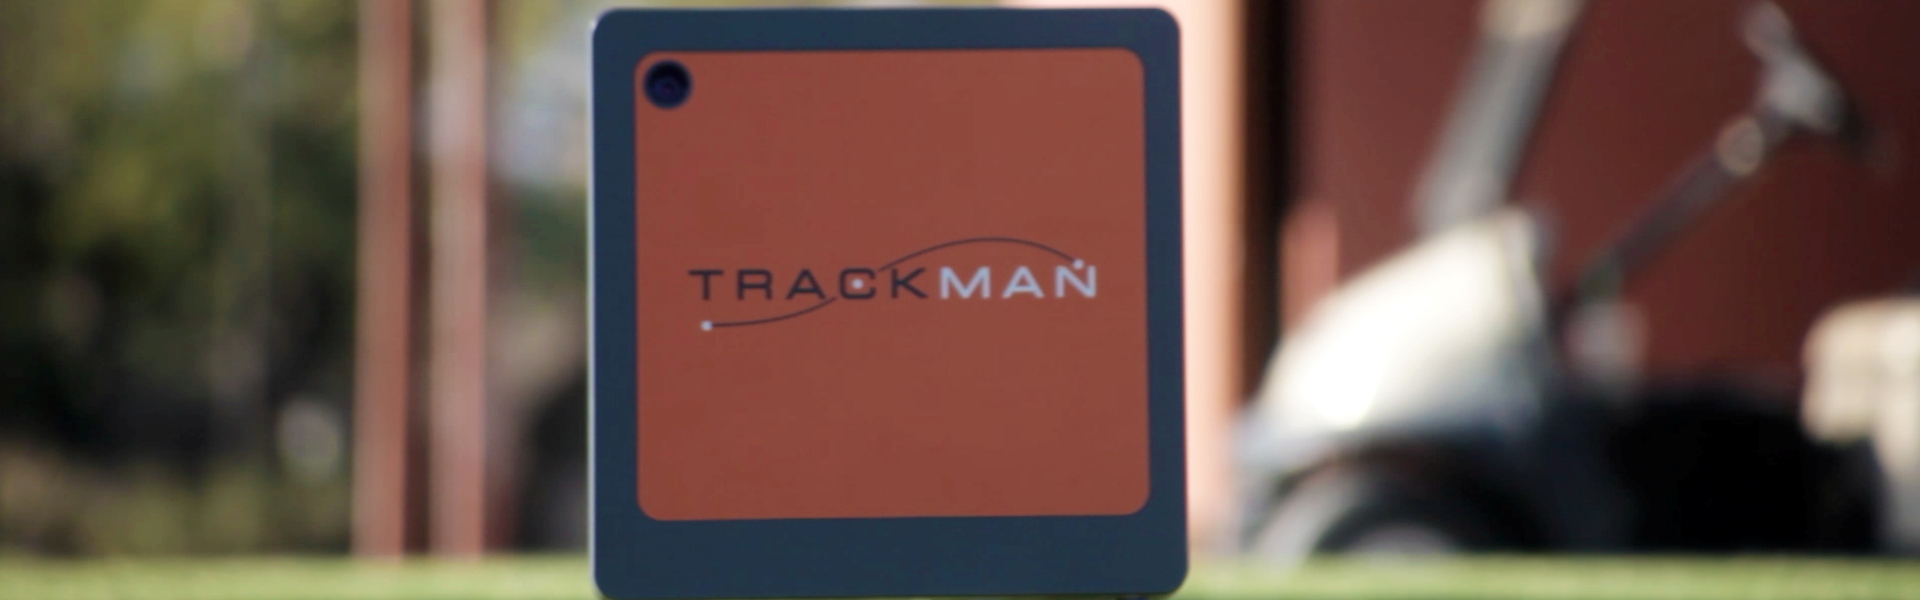 Trackman Pro Header